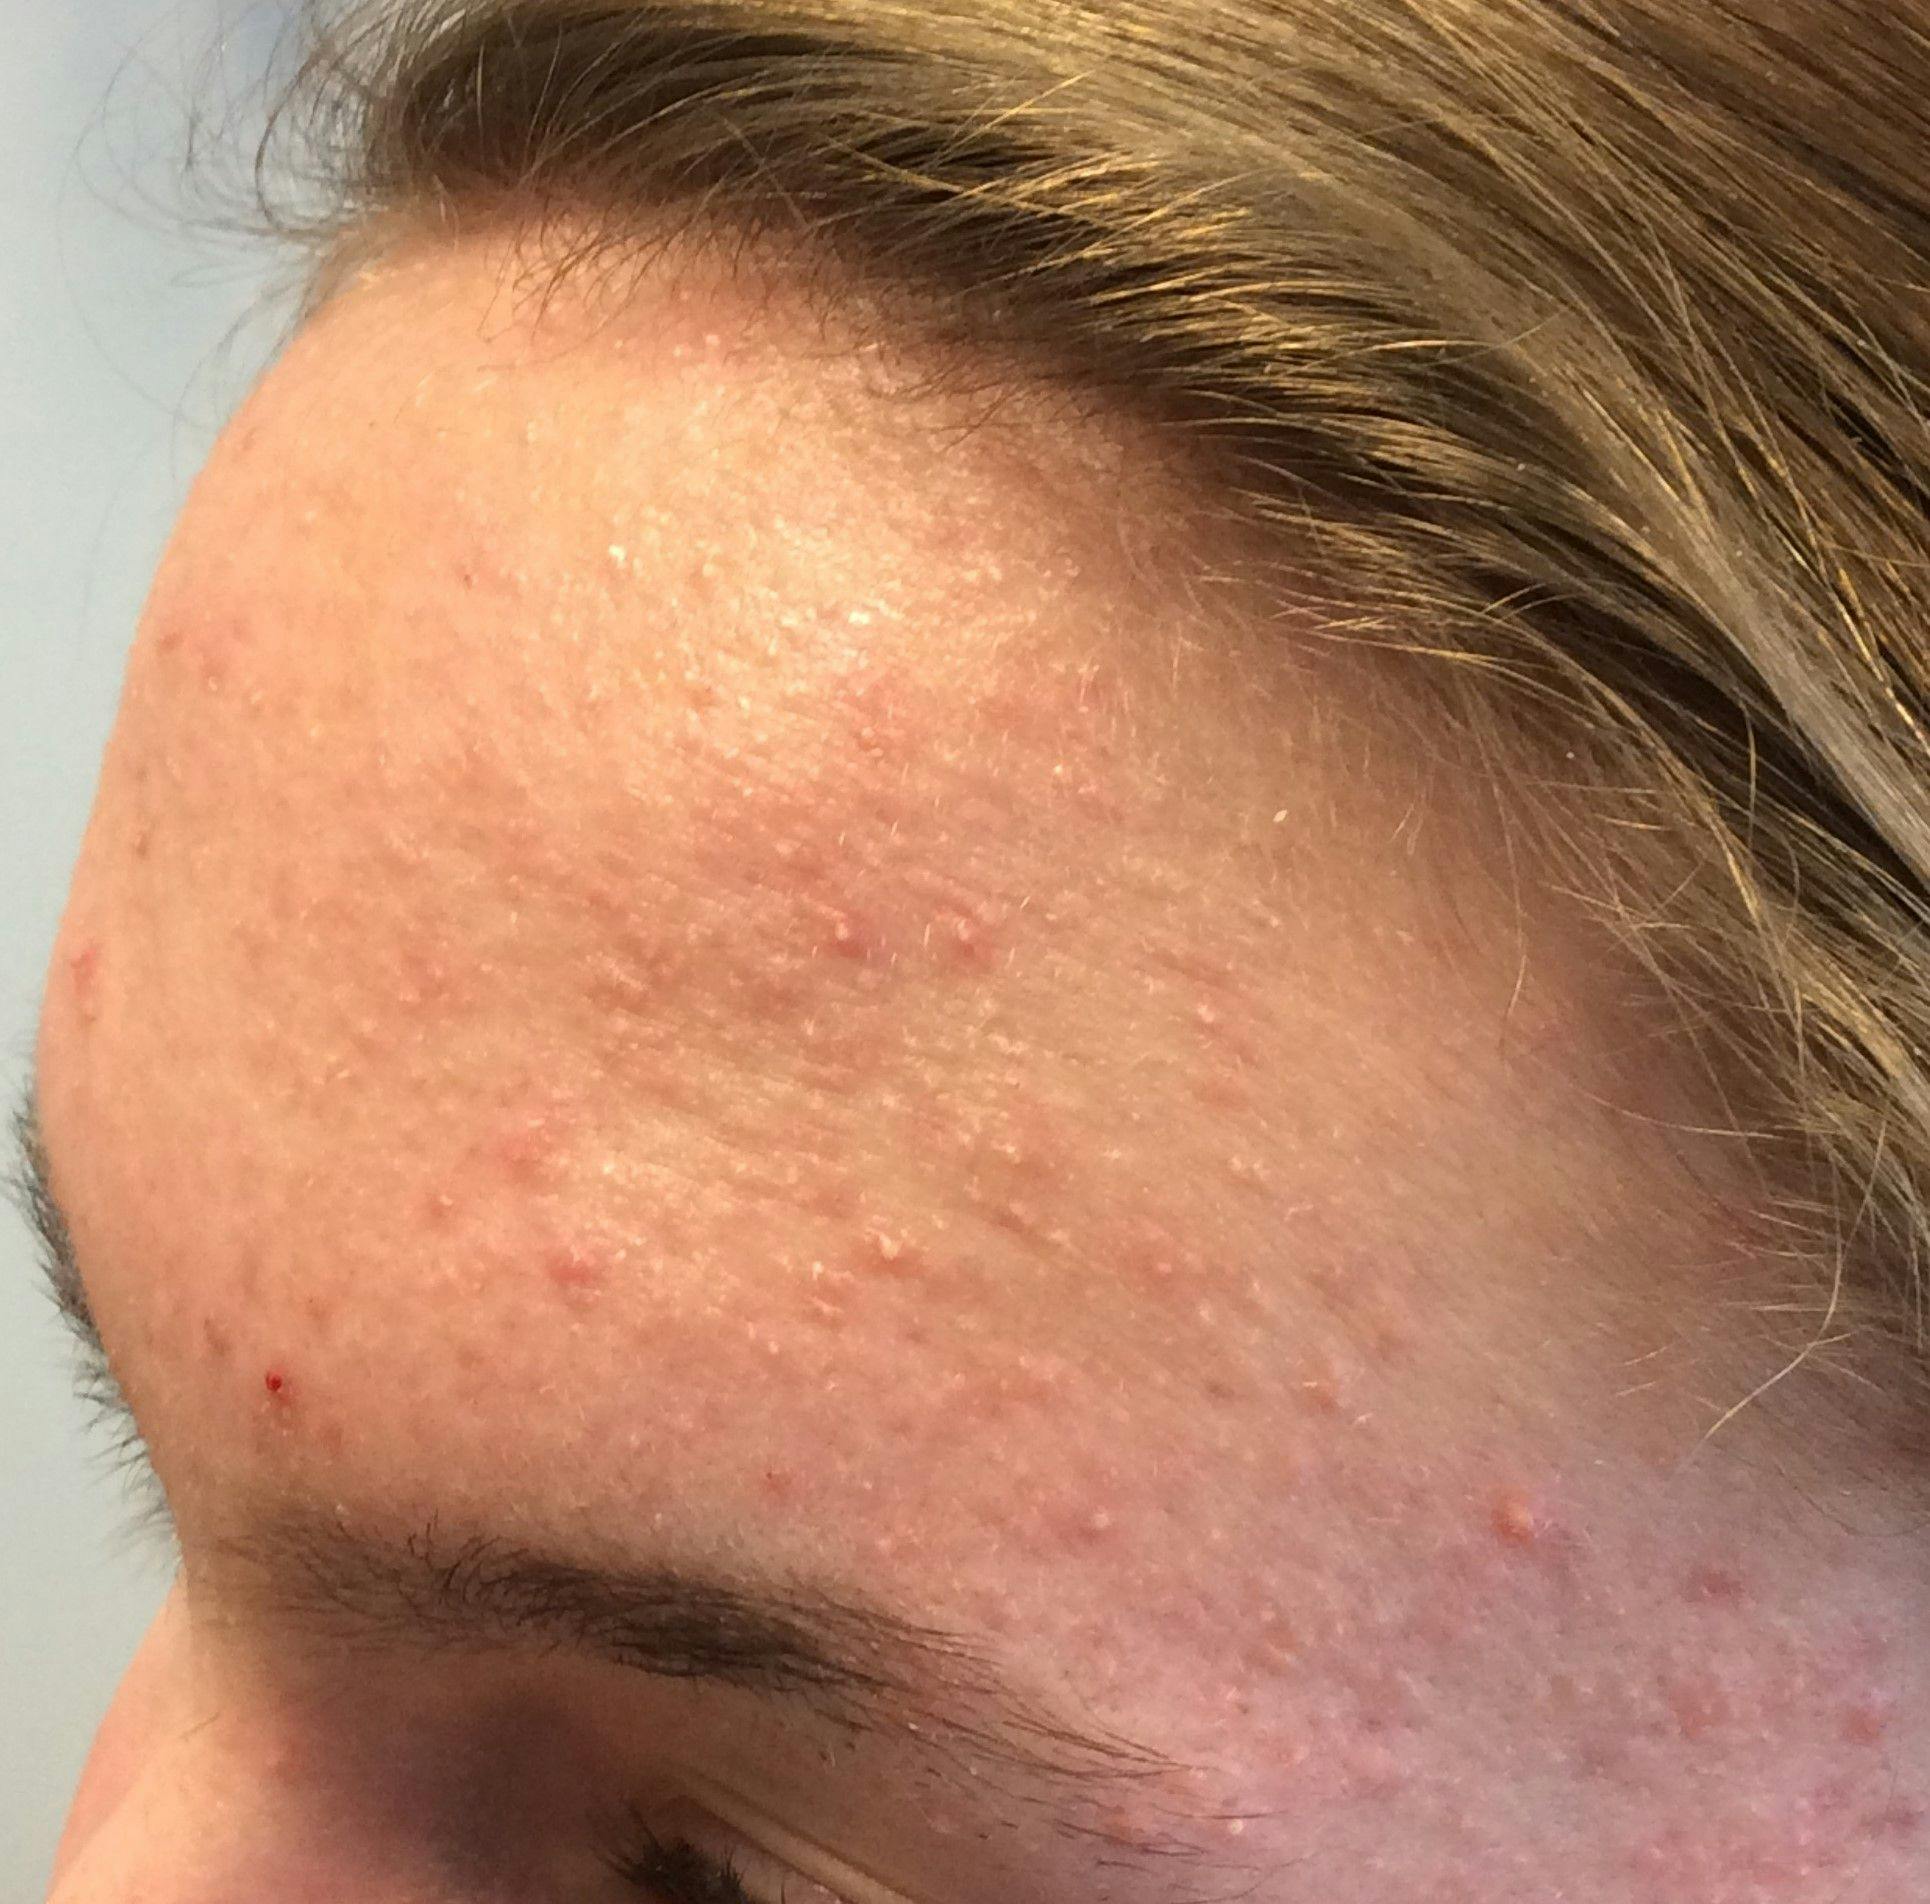 Is it acne or Pityrosporum folliculitis?